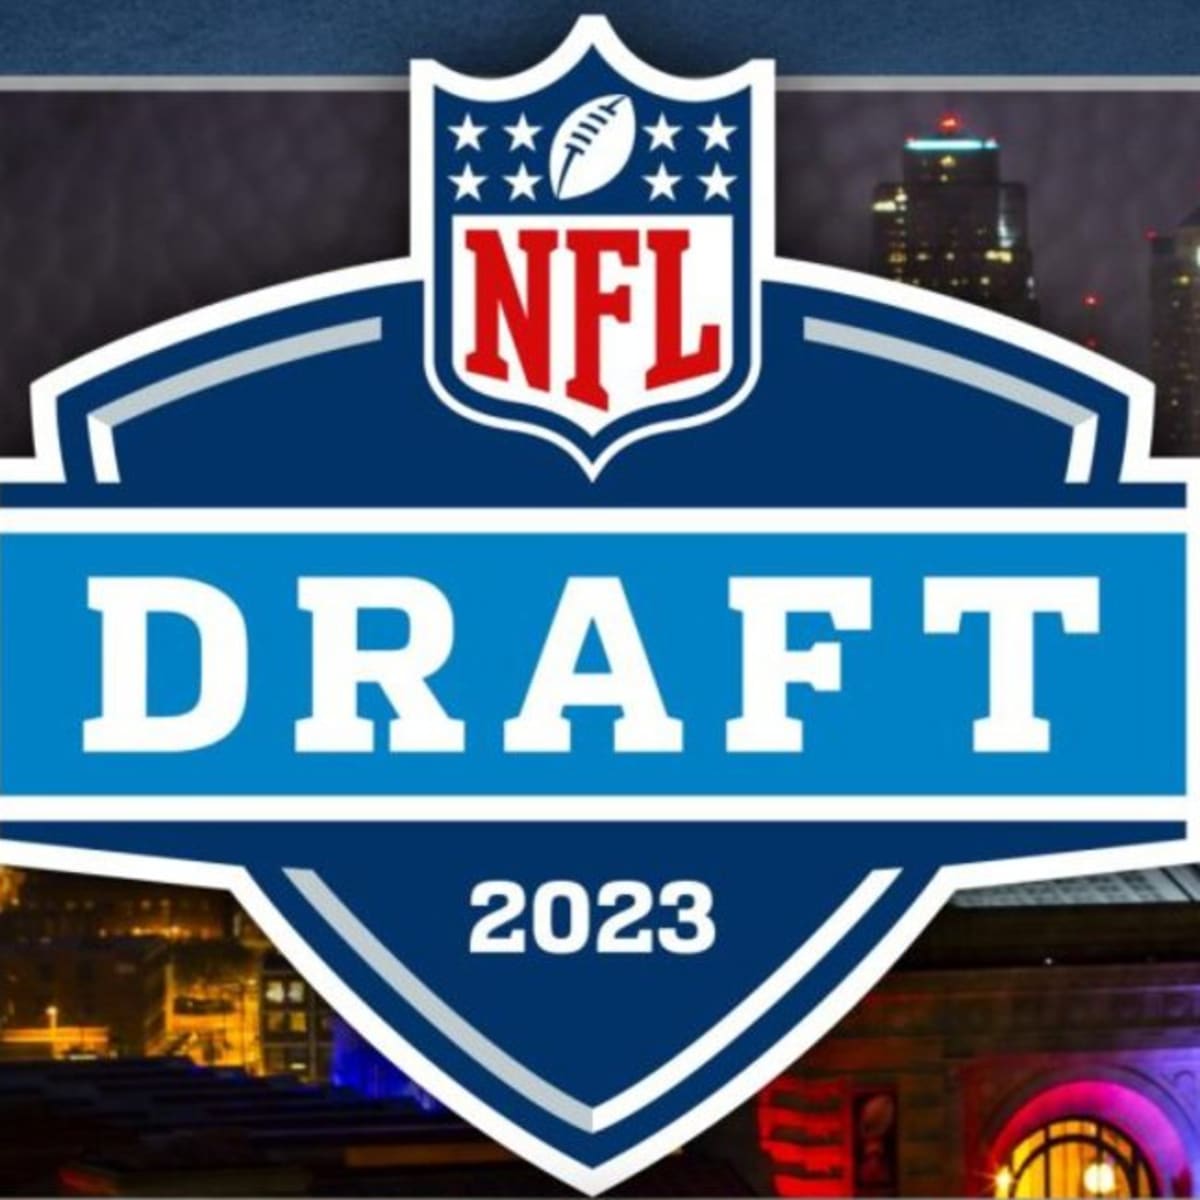 Introducing the Raiders' 2023 Draft Class